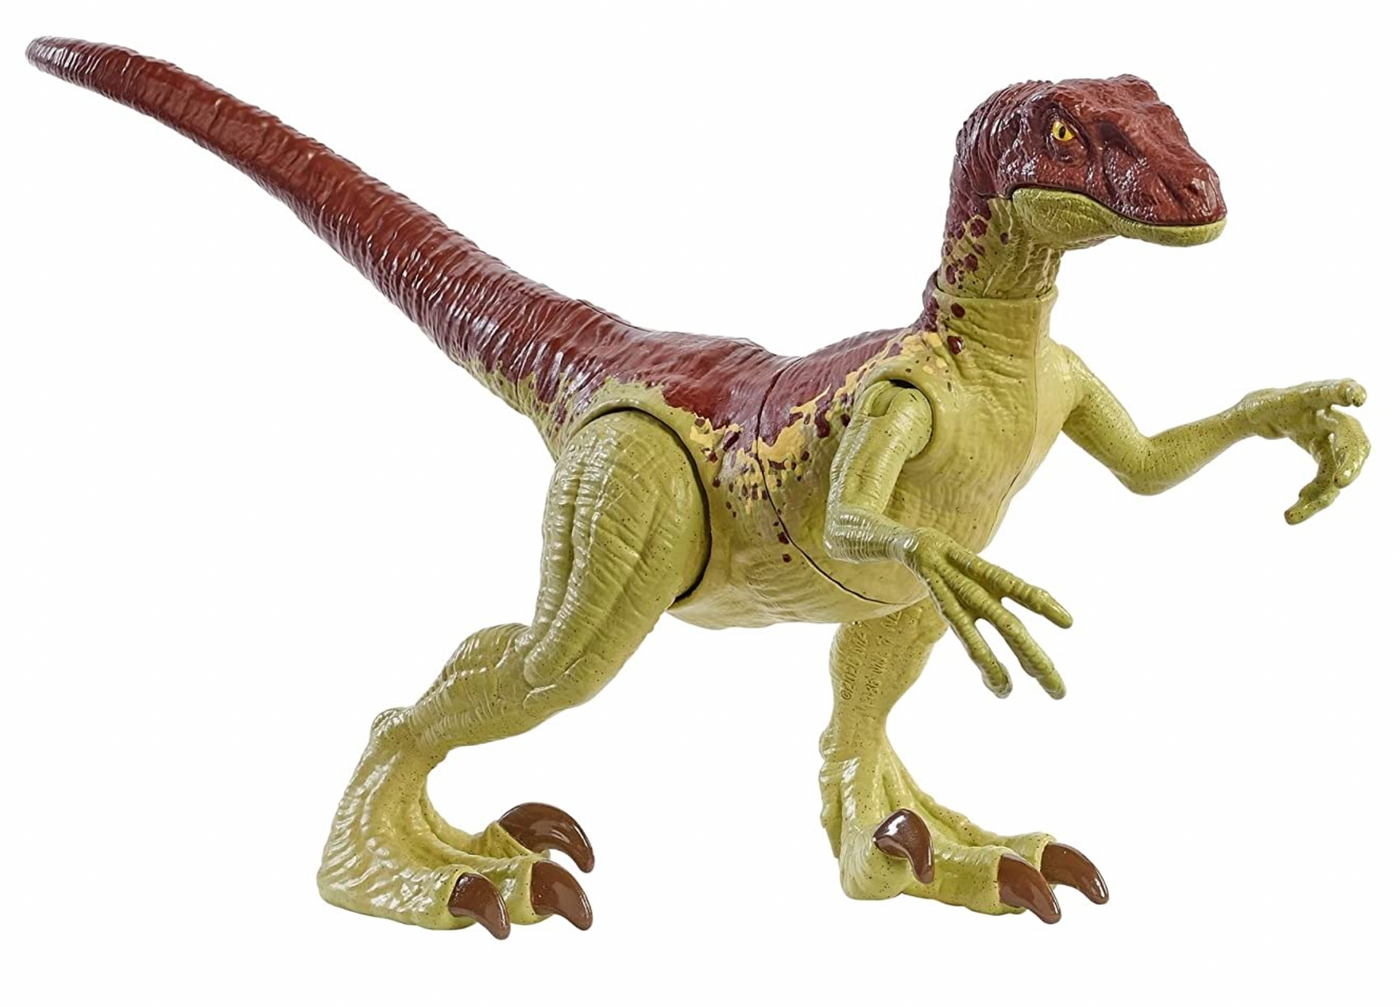 Jurassic World Camp Cretaceous Fierce Force Dino Escape Velociraptor Figure New